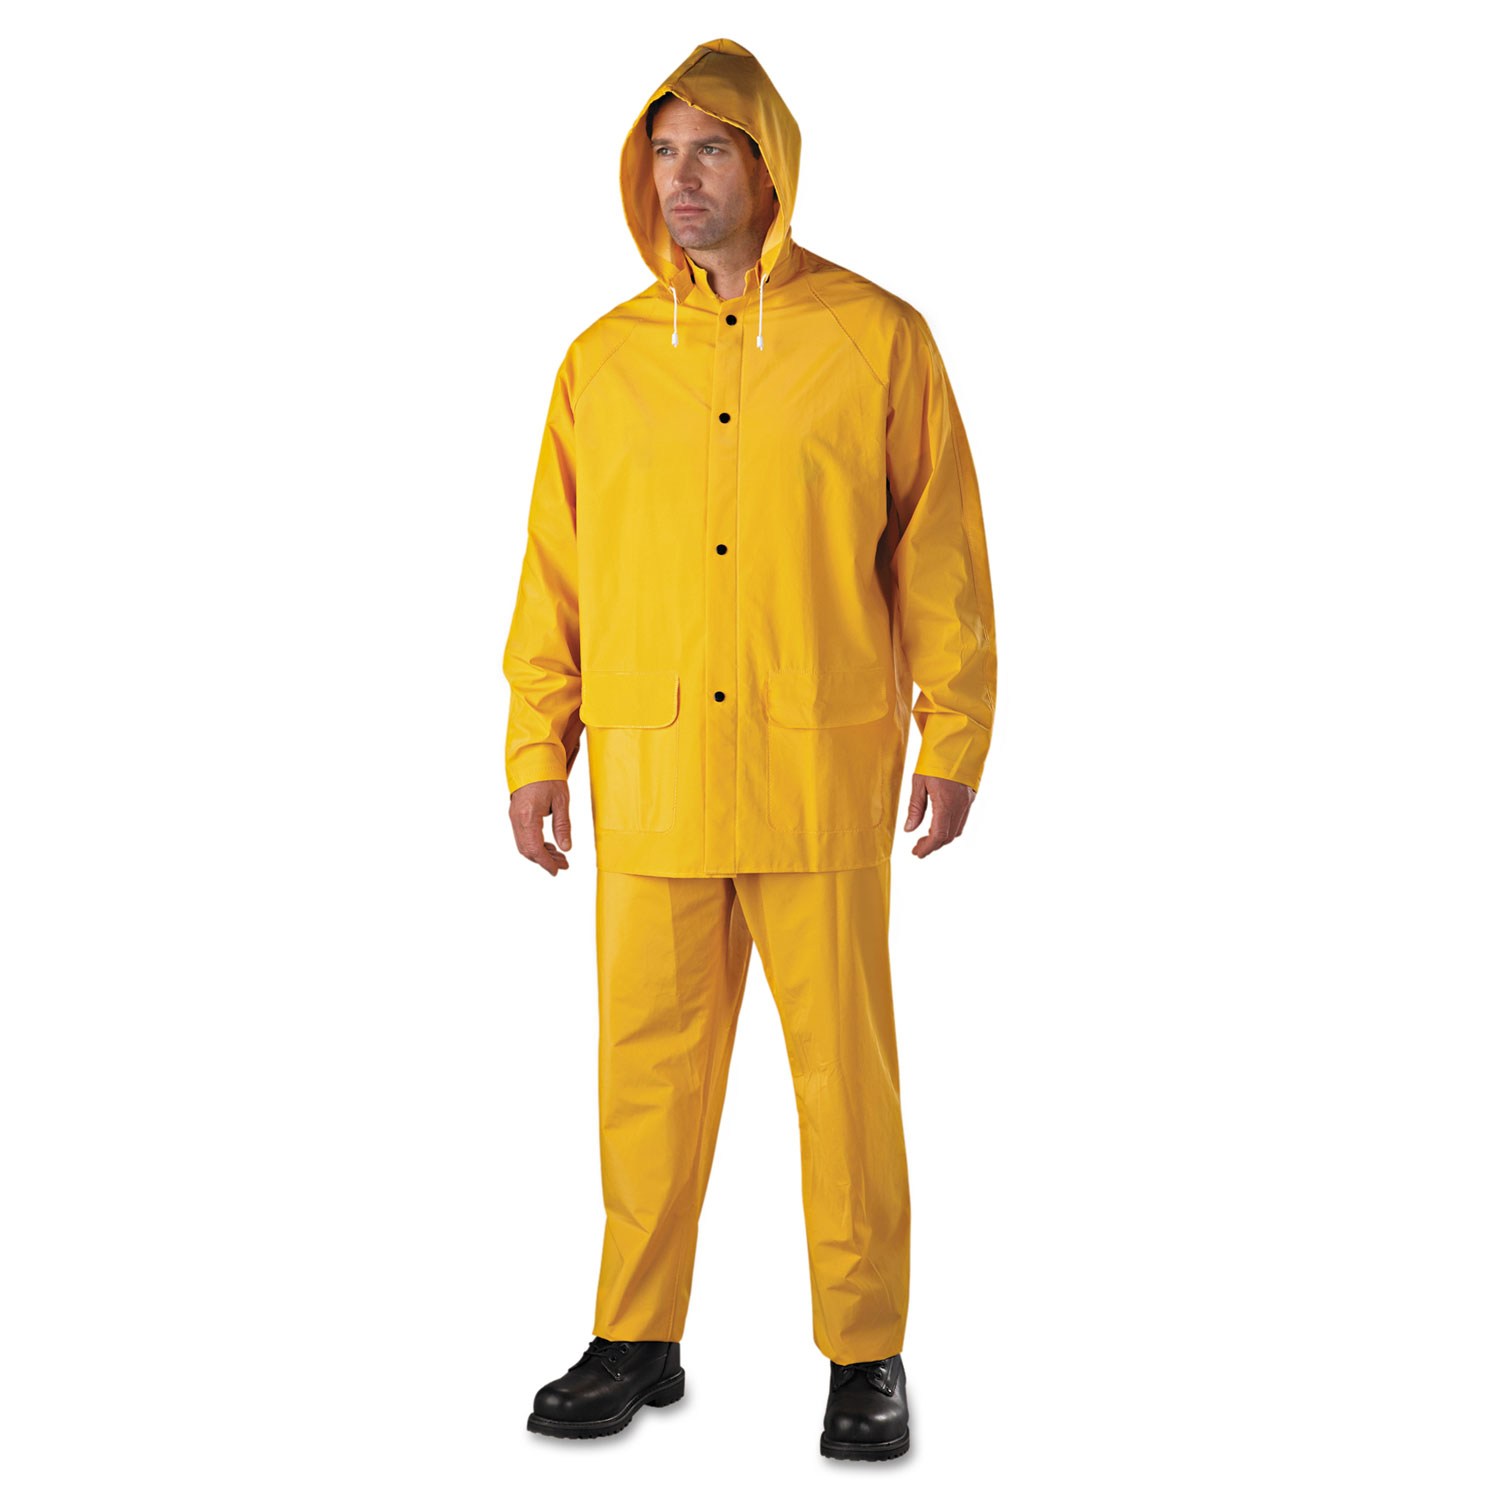  Anchor Brand 4035/XL Rainsuit, PVC/Polyester, Yellow, X-Large (ANR9000XL) 